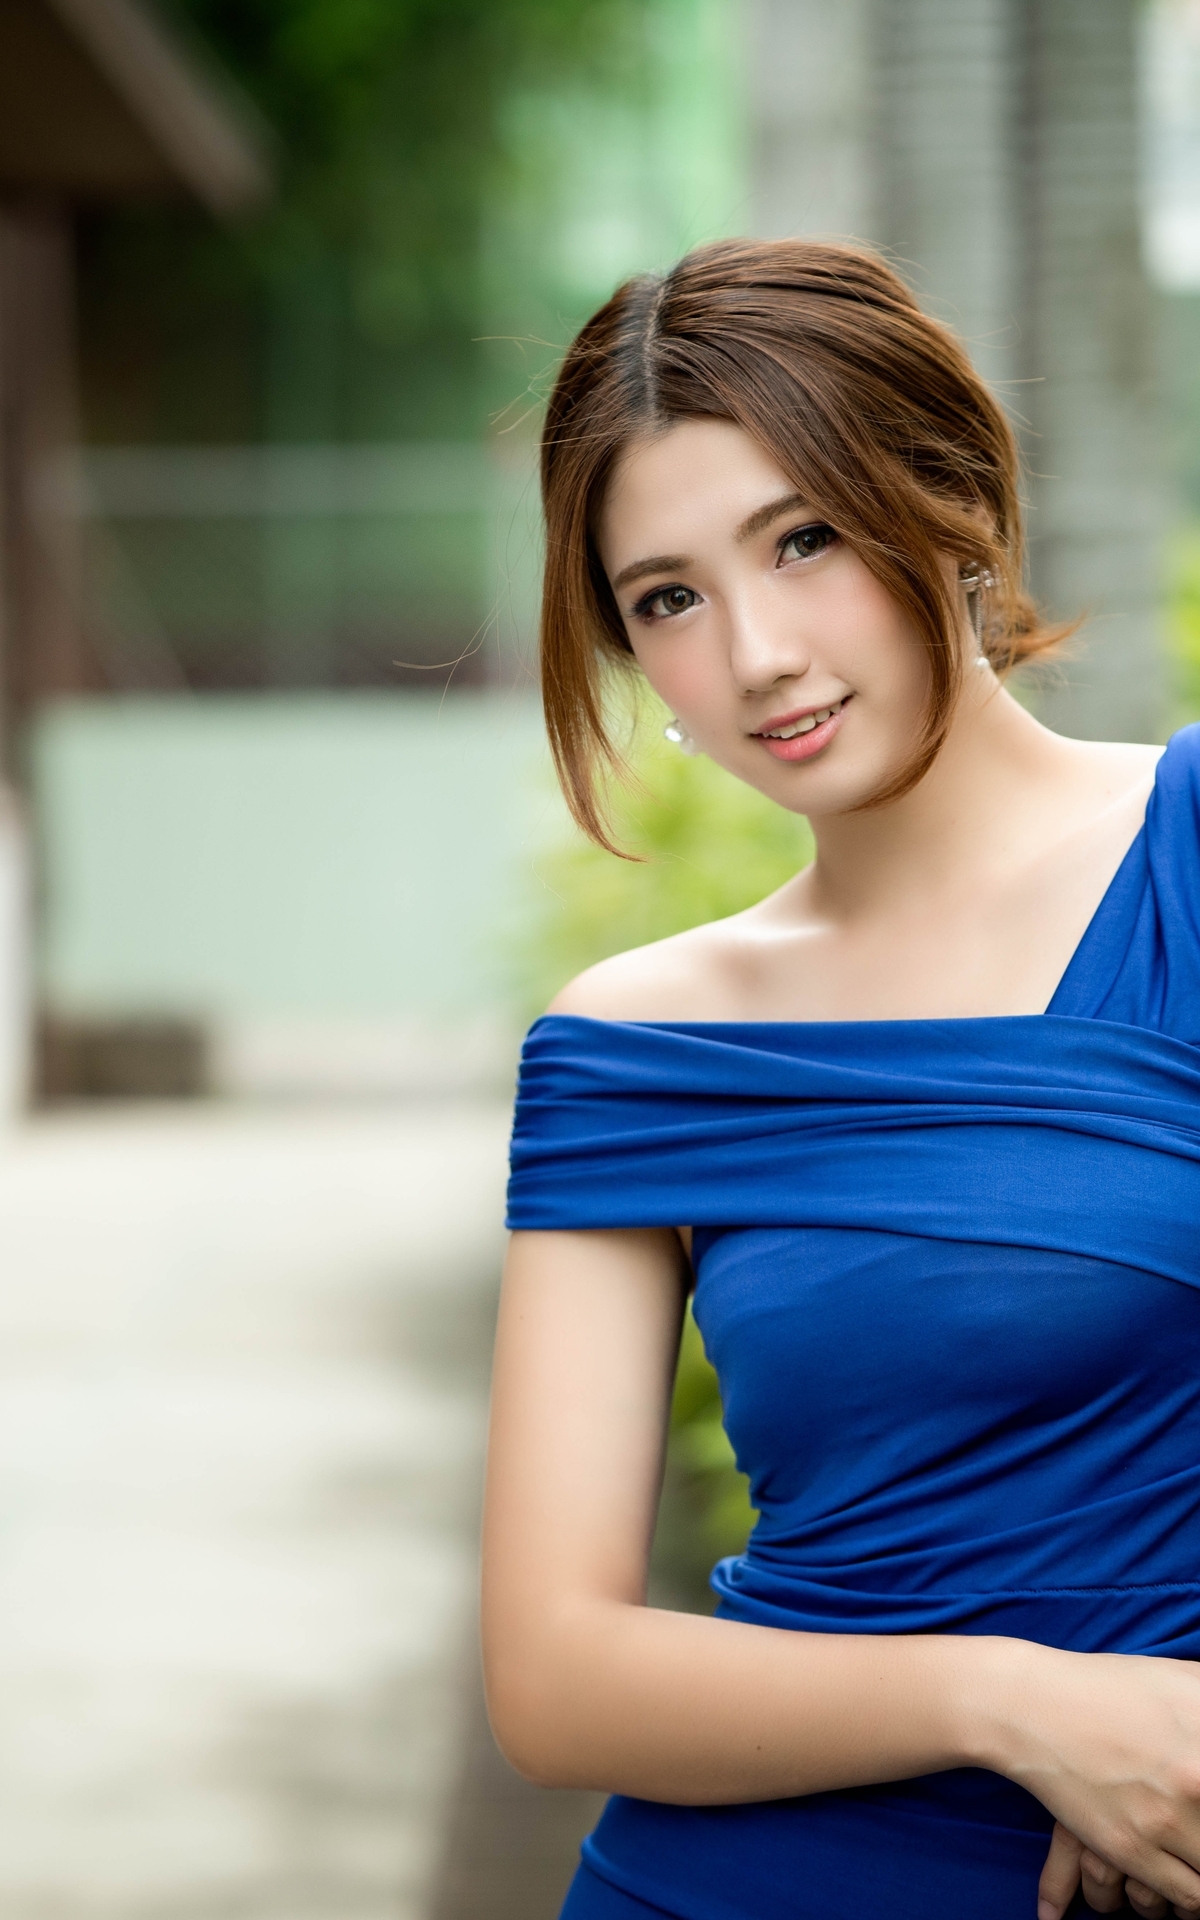 Image: Girl, Asian, smile, mood, dress, blue, street